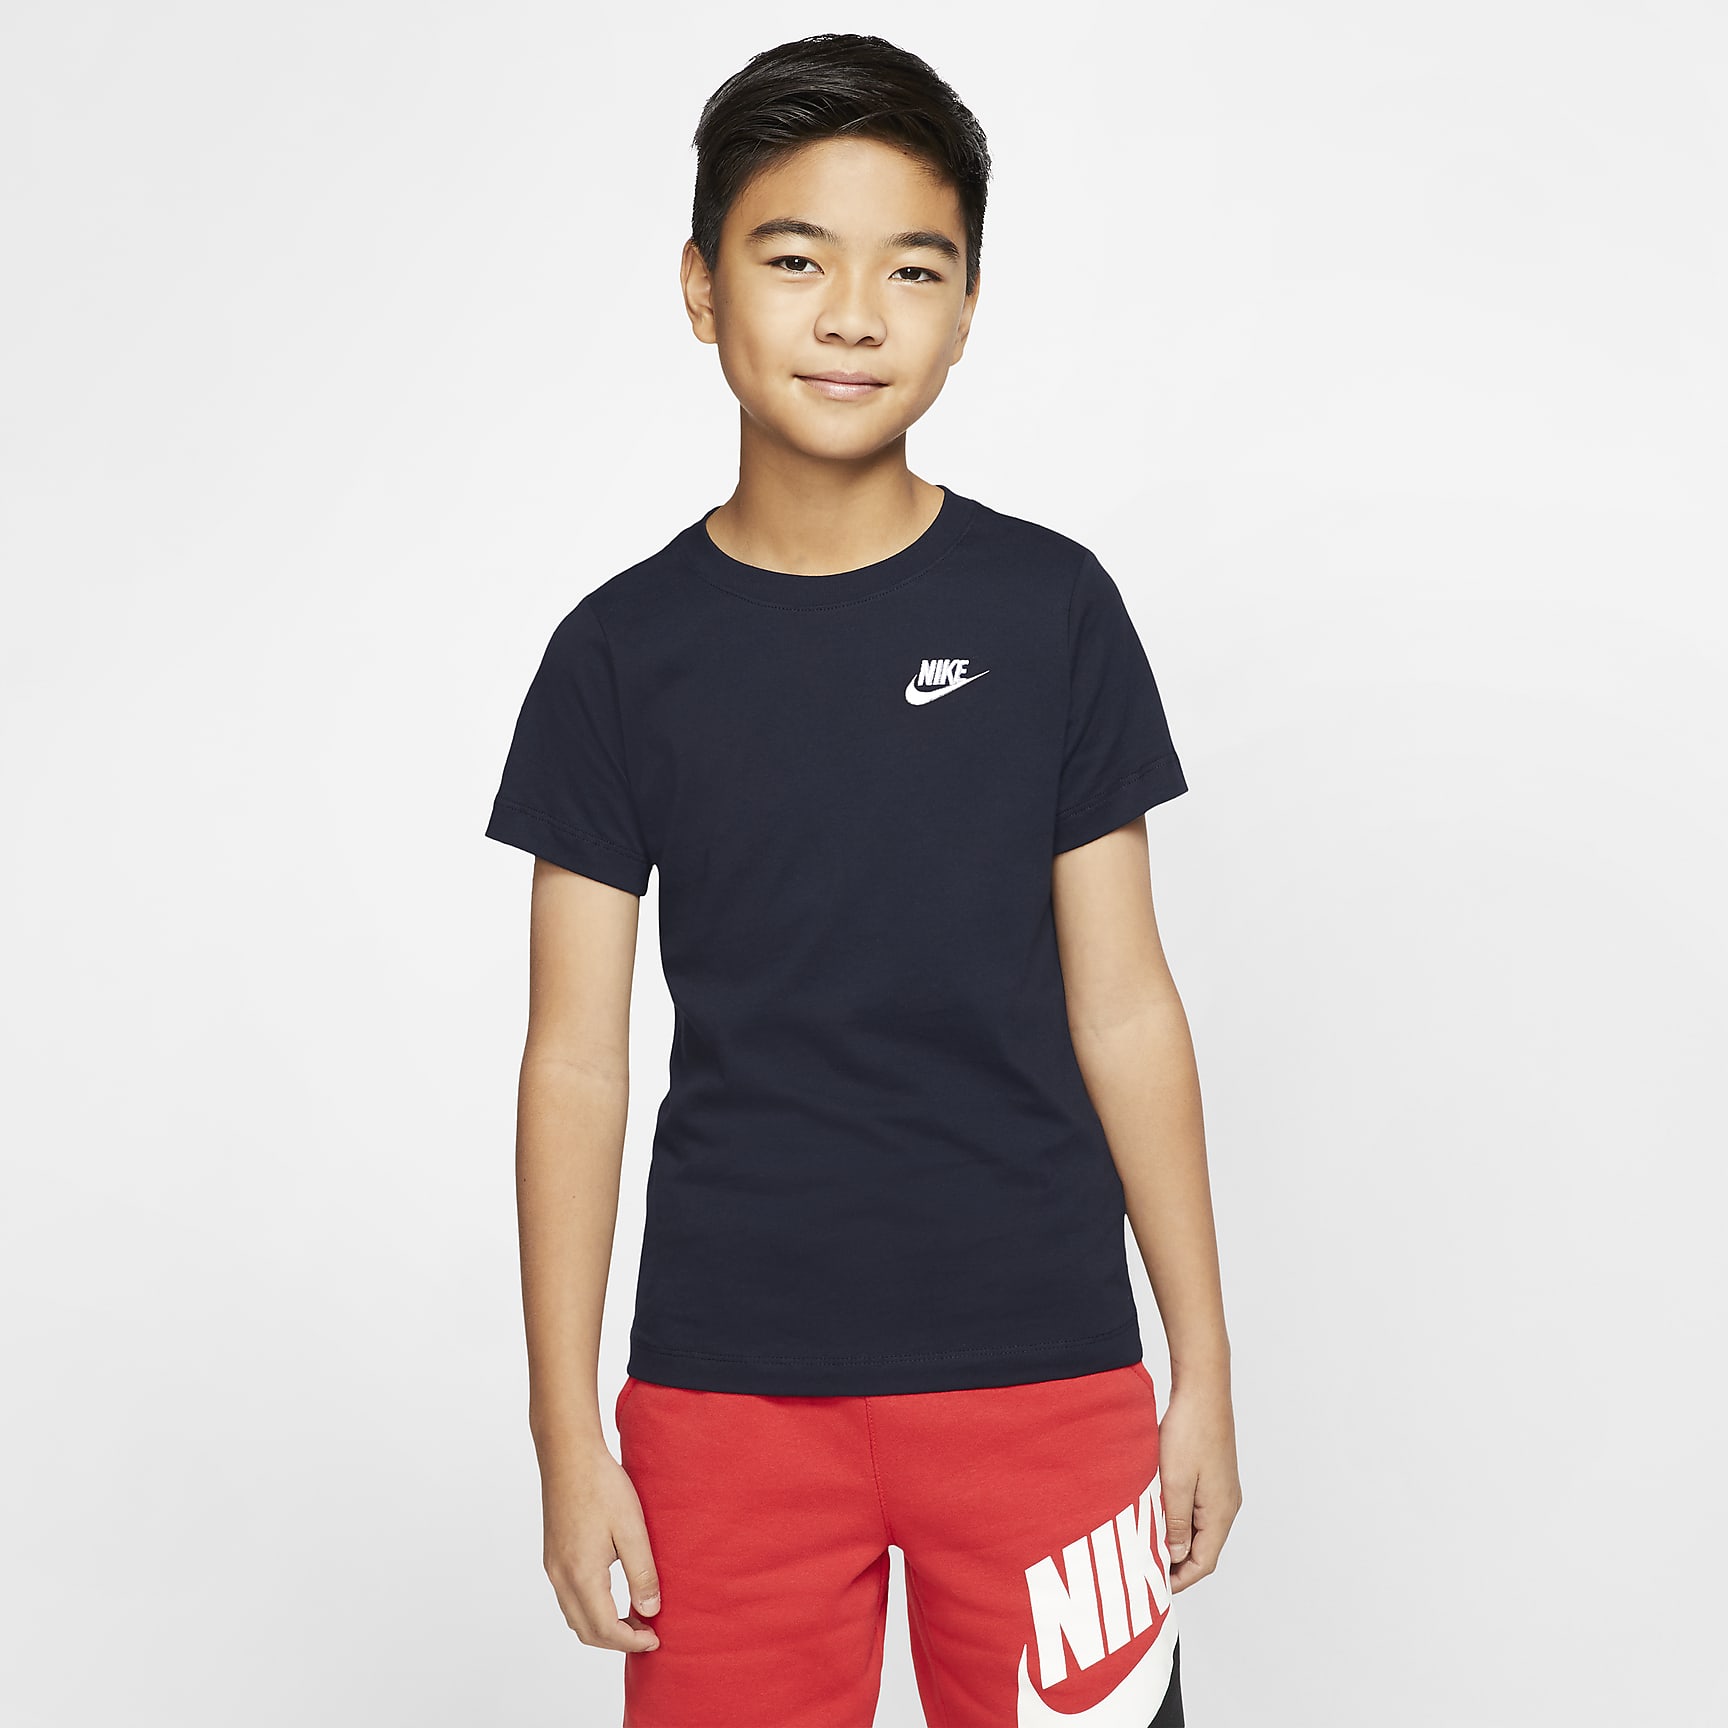 T-shirt Nike Sportswear för ungdom  - Obsidian/Vit